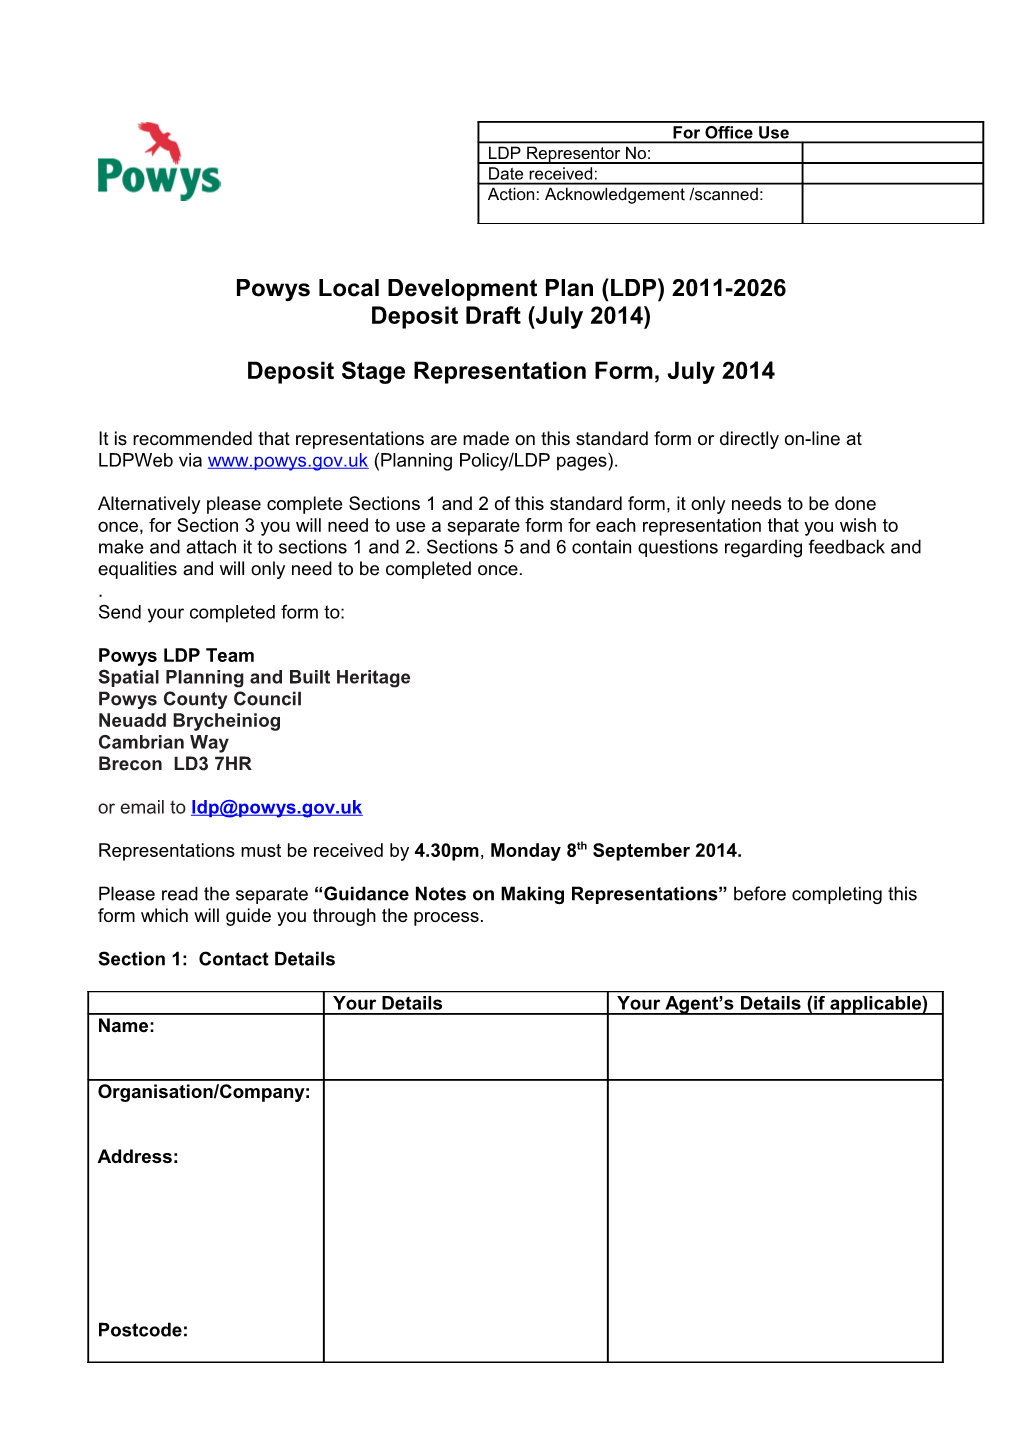 Powys Local Development Plan 2011-2026